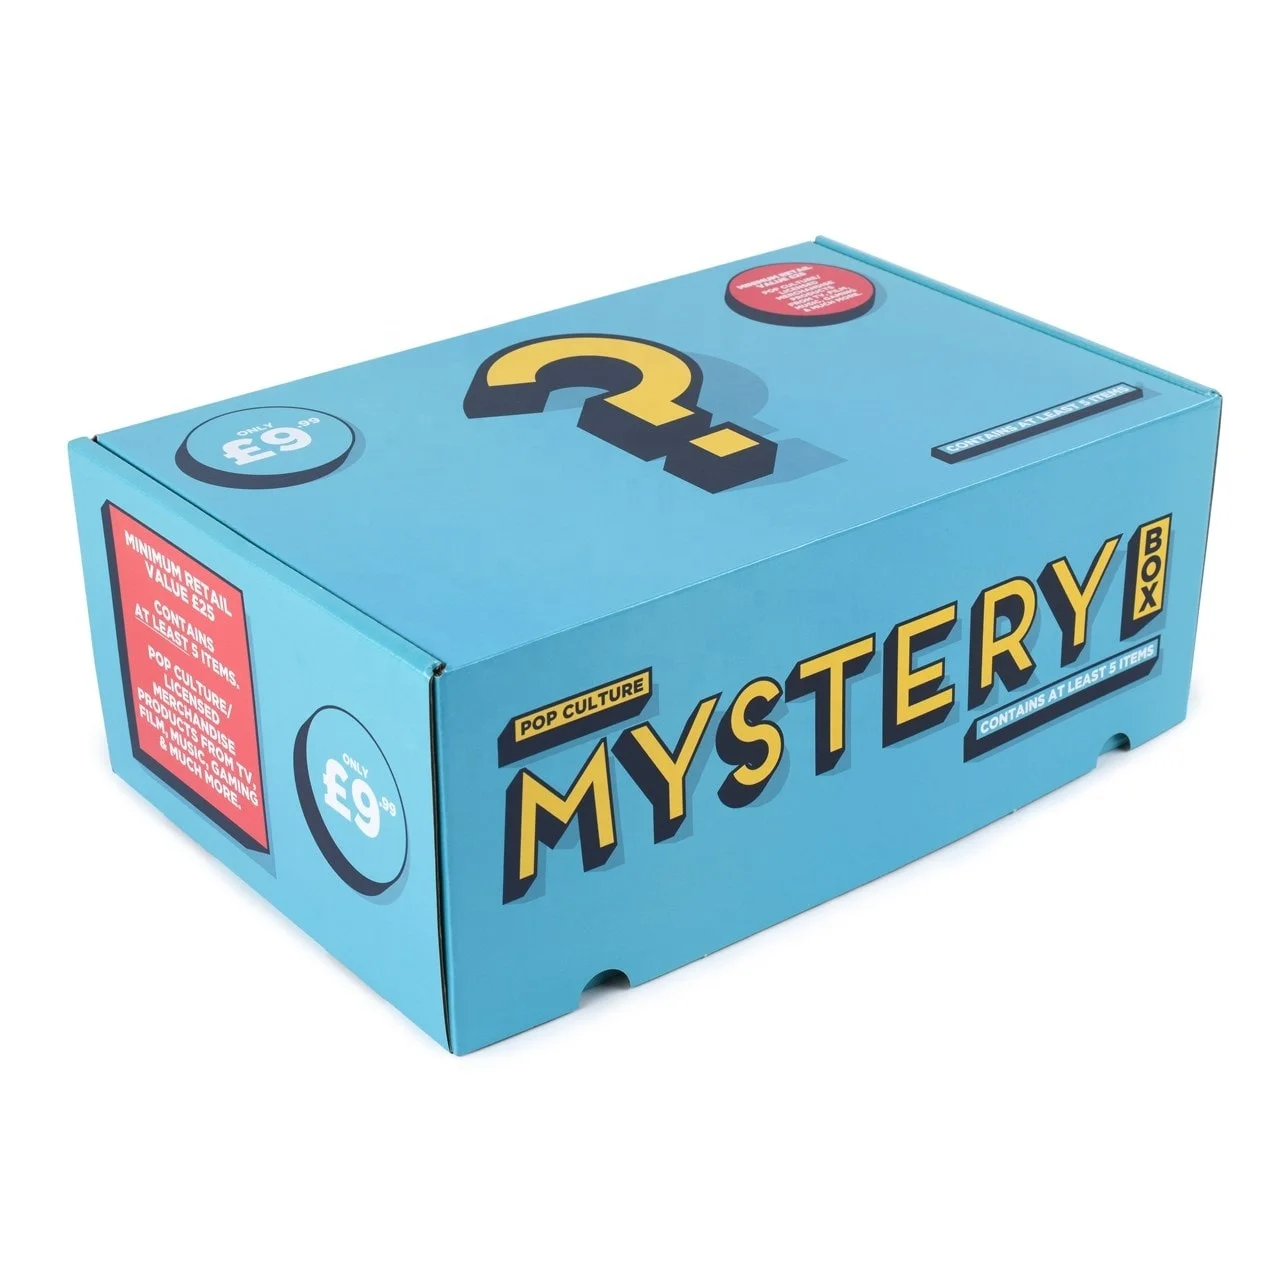 Pop boxes. Mystery Box игрушки. Mystery Box фото. Игровая приставка Mystery Box. Mystery Box Pop Culture.